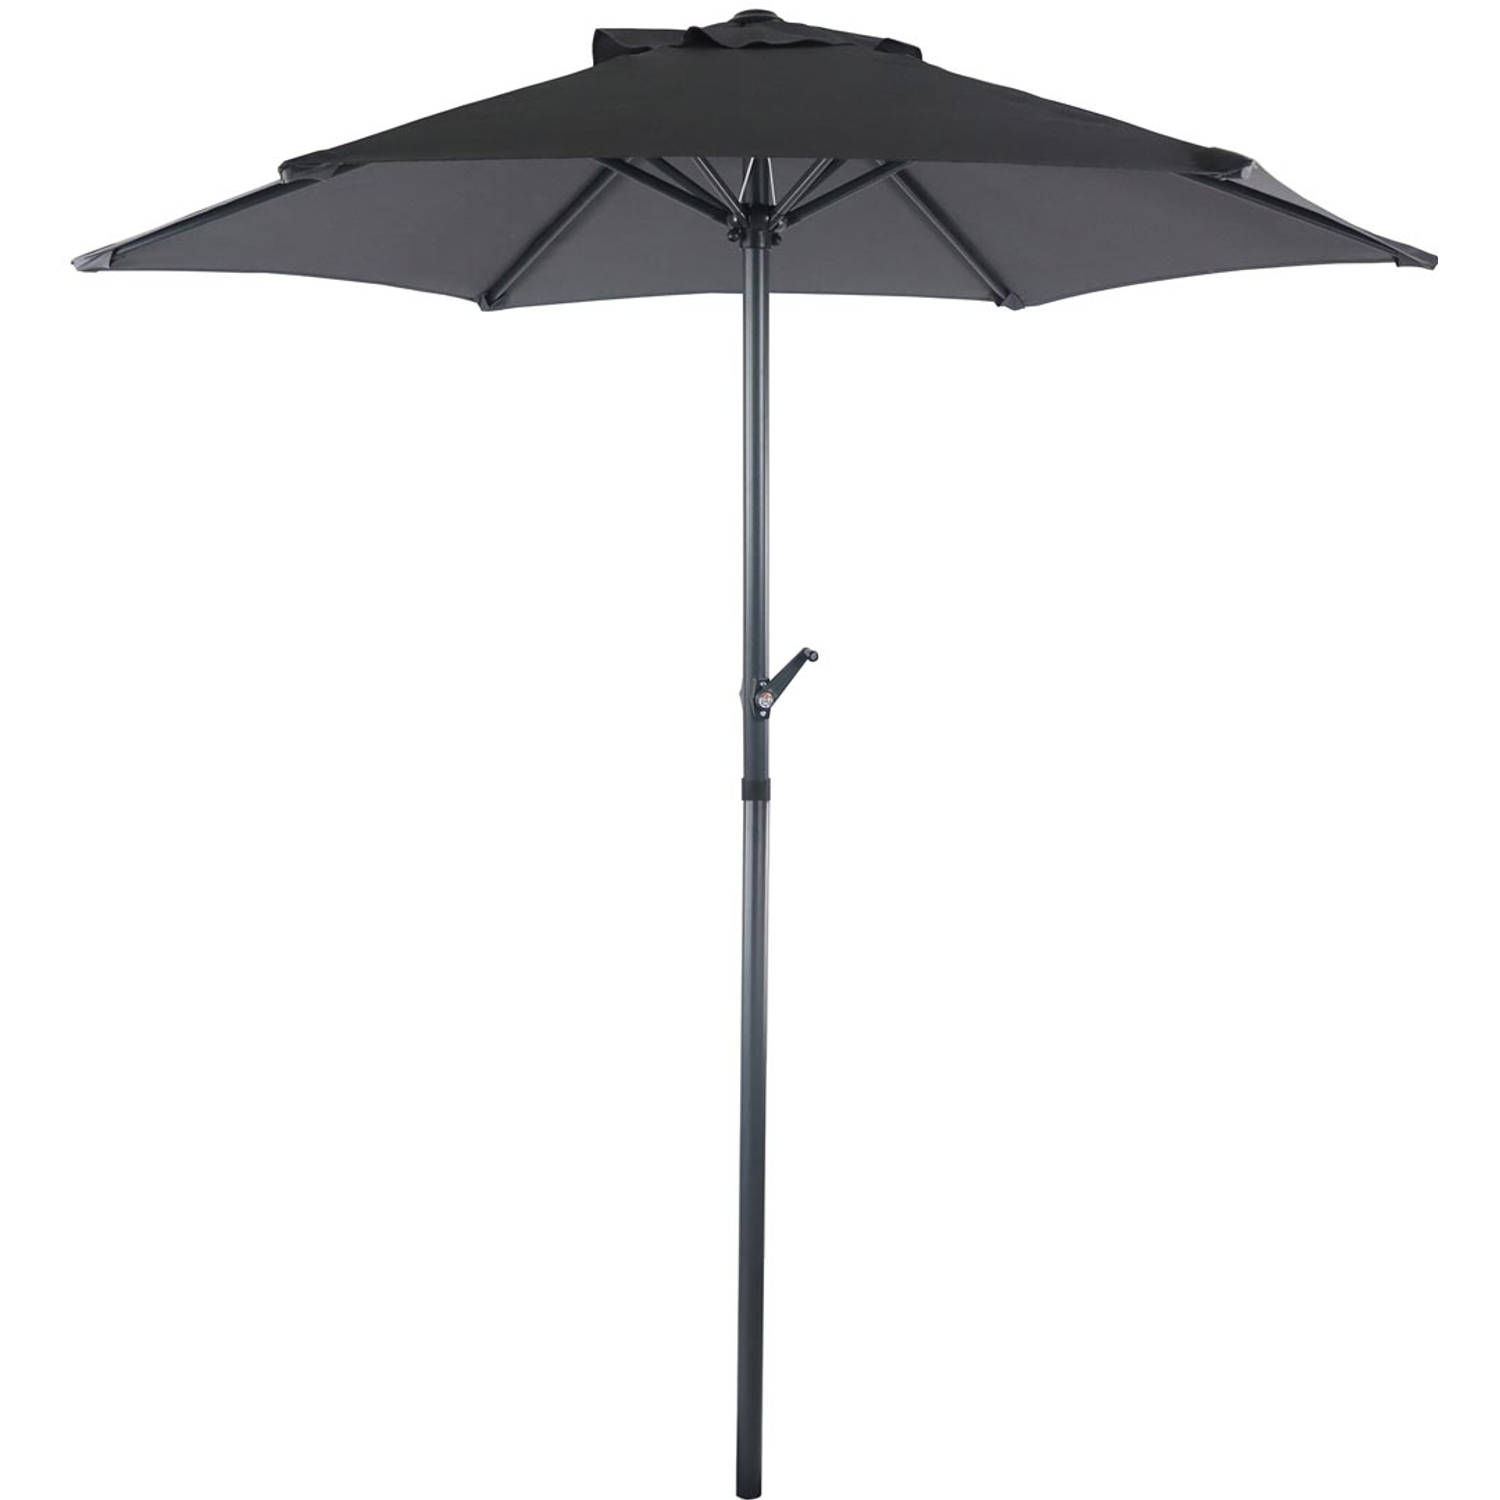 Vera parasol Ø200cm antraciet.